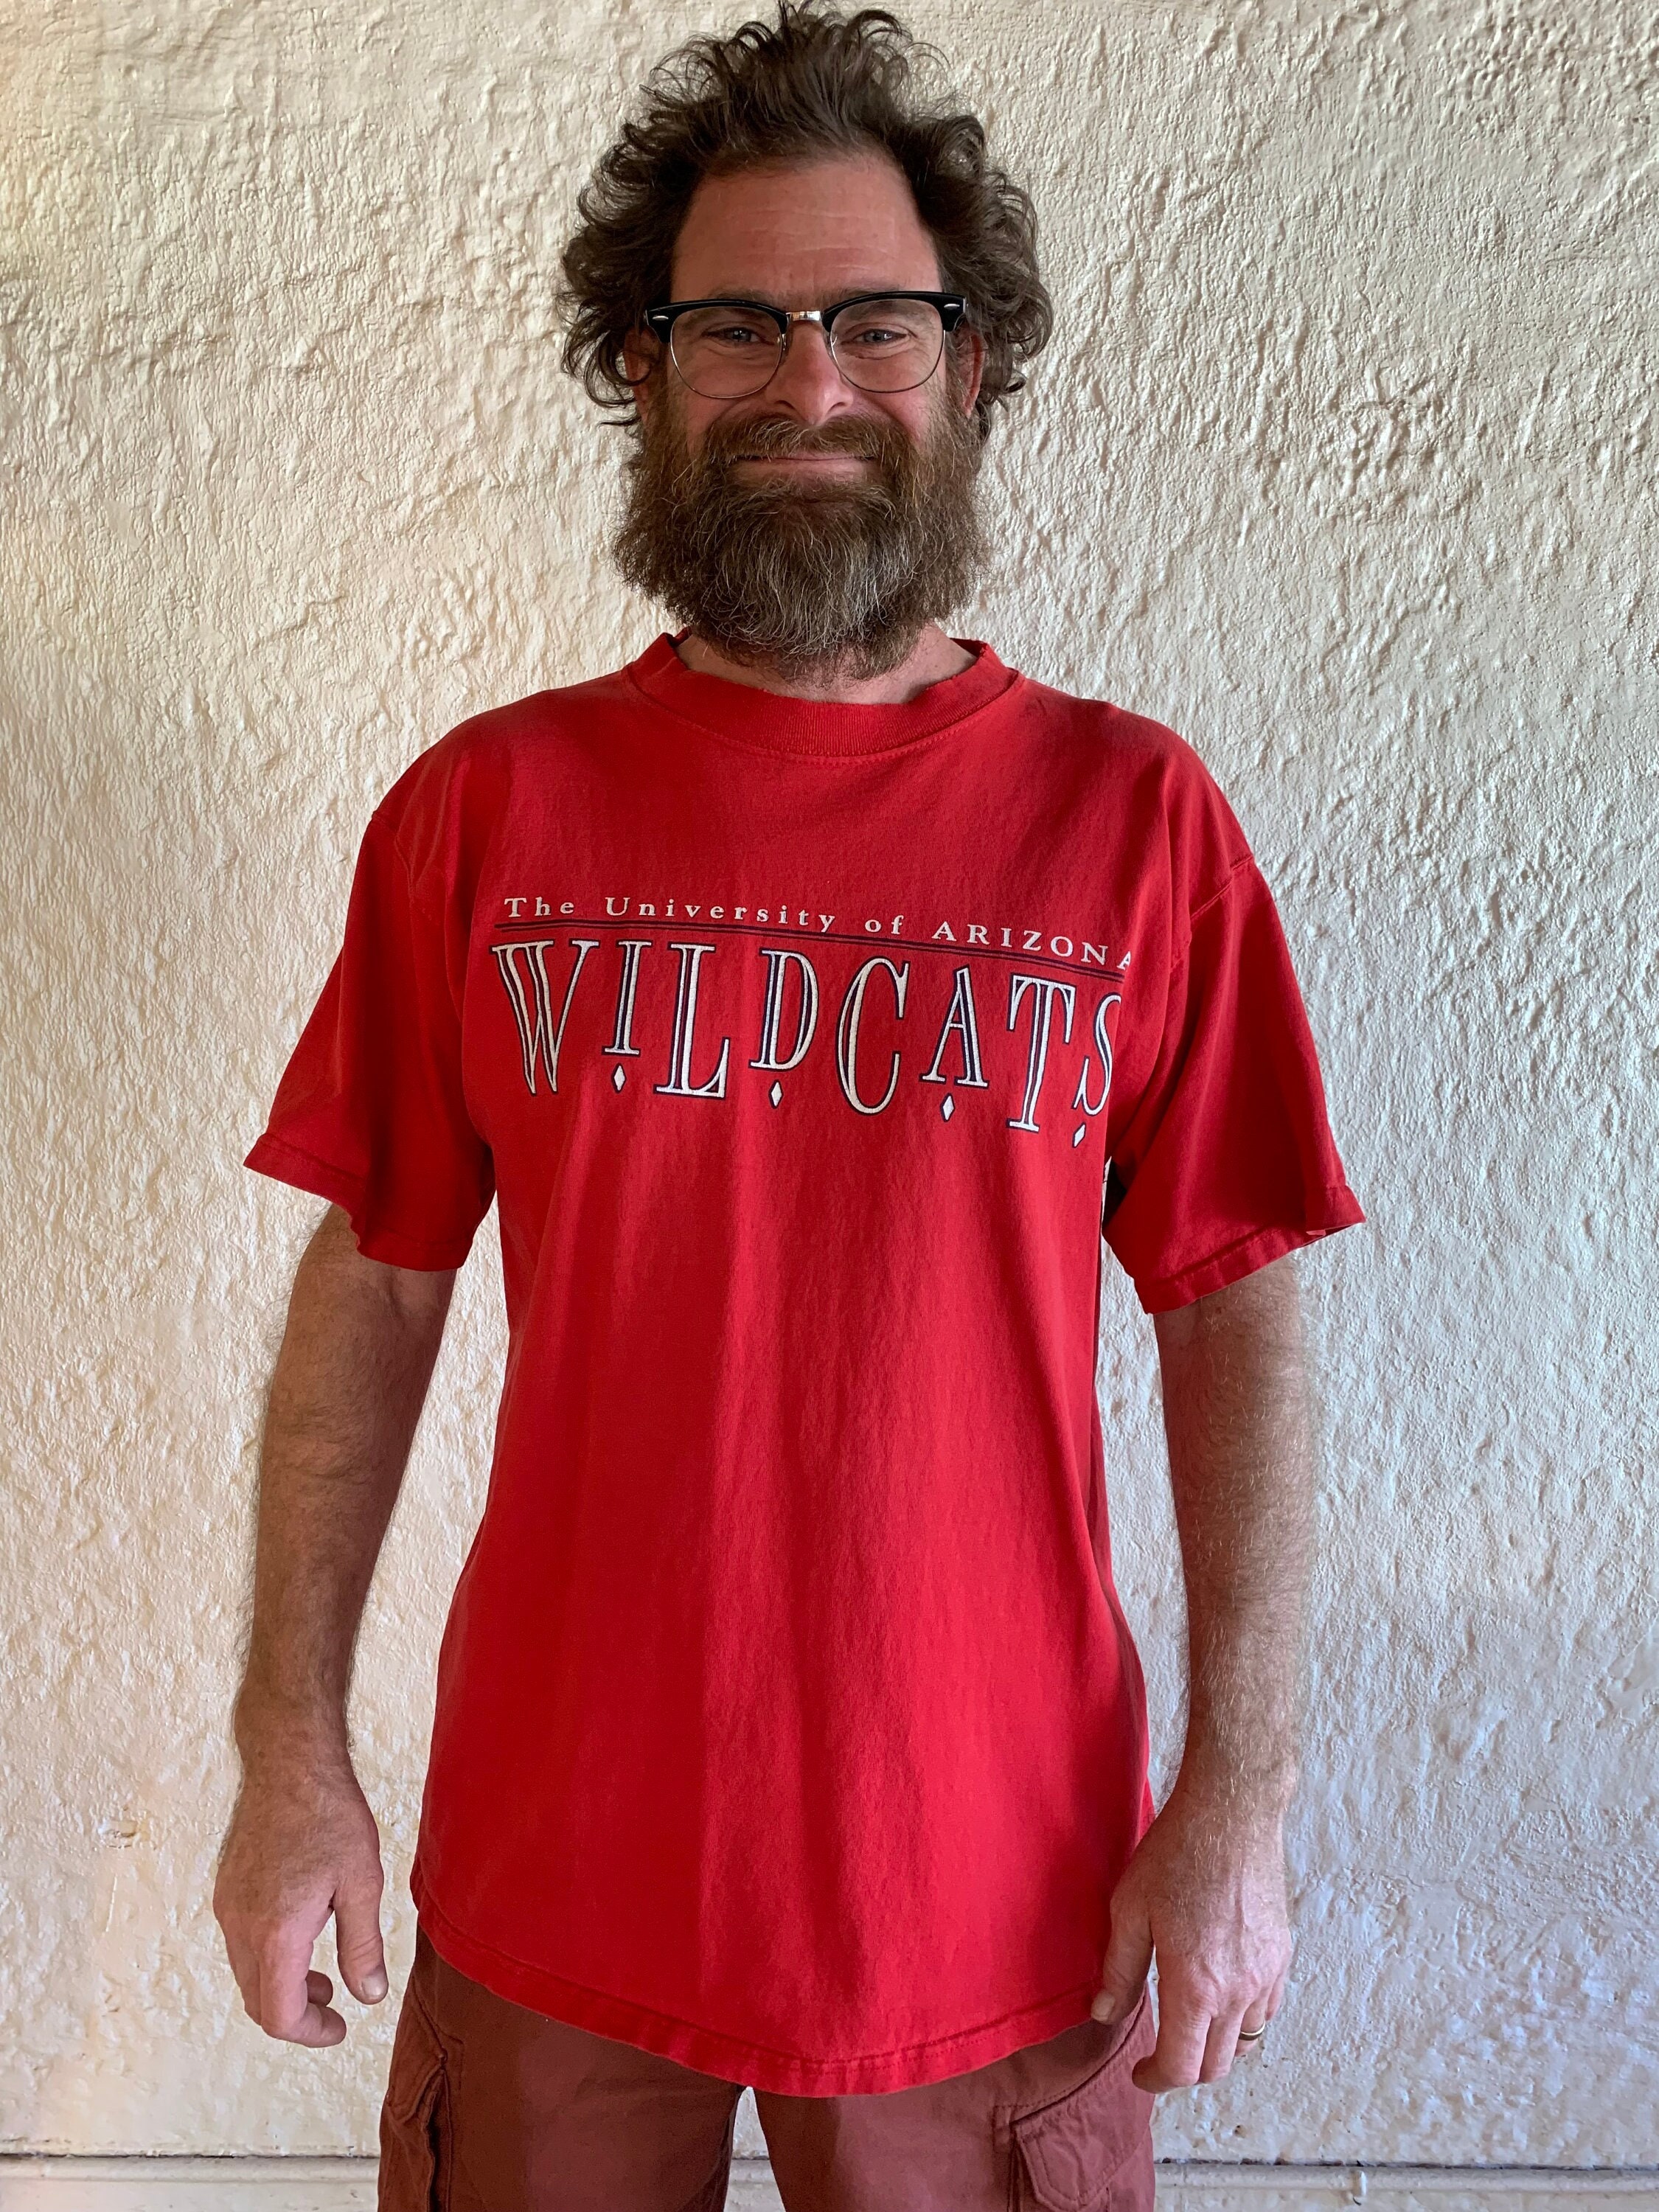 Arizona Wildcats - Vintage Etsy Shirt